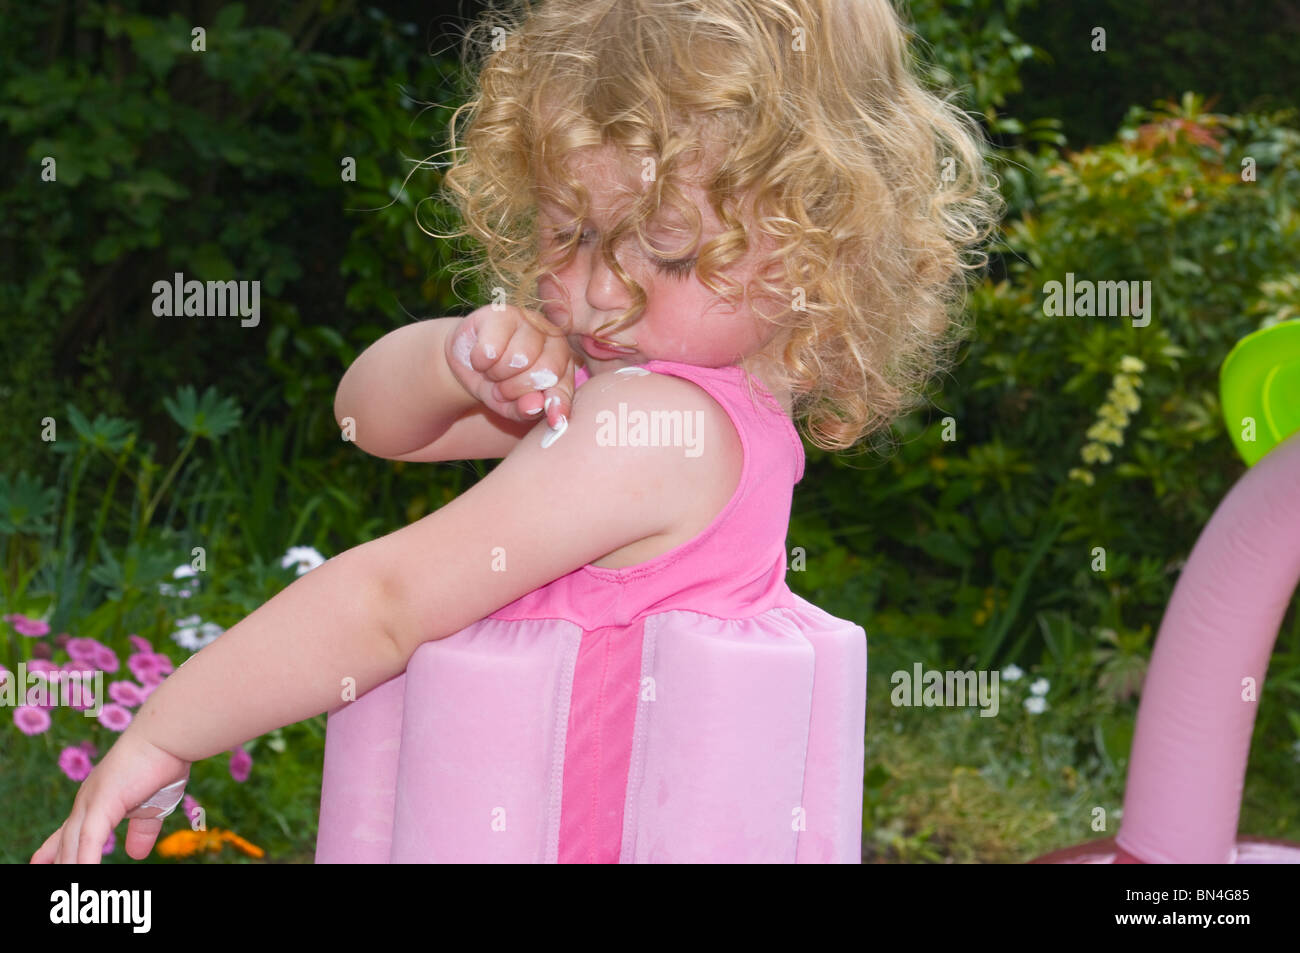 2 Year Old Girl Applying Suncream To Her Arm Stock Photo